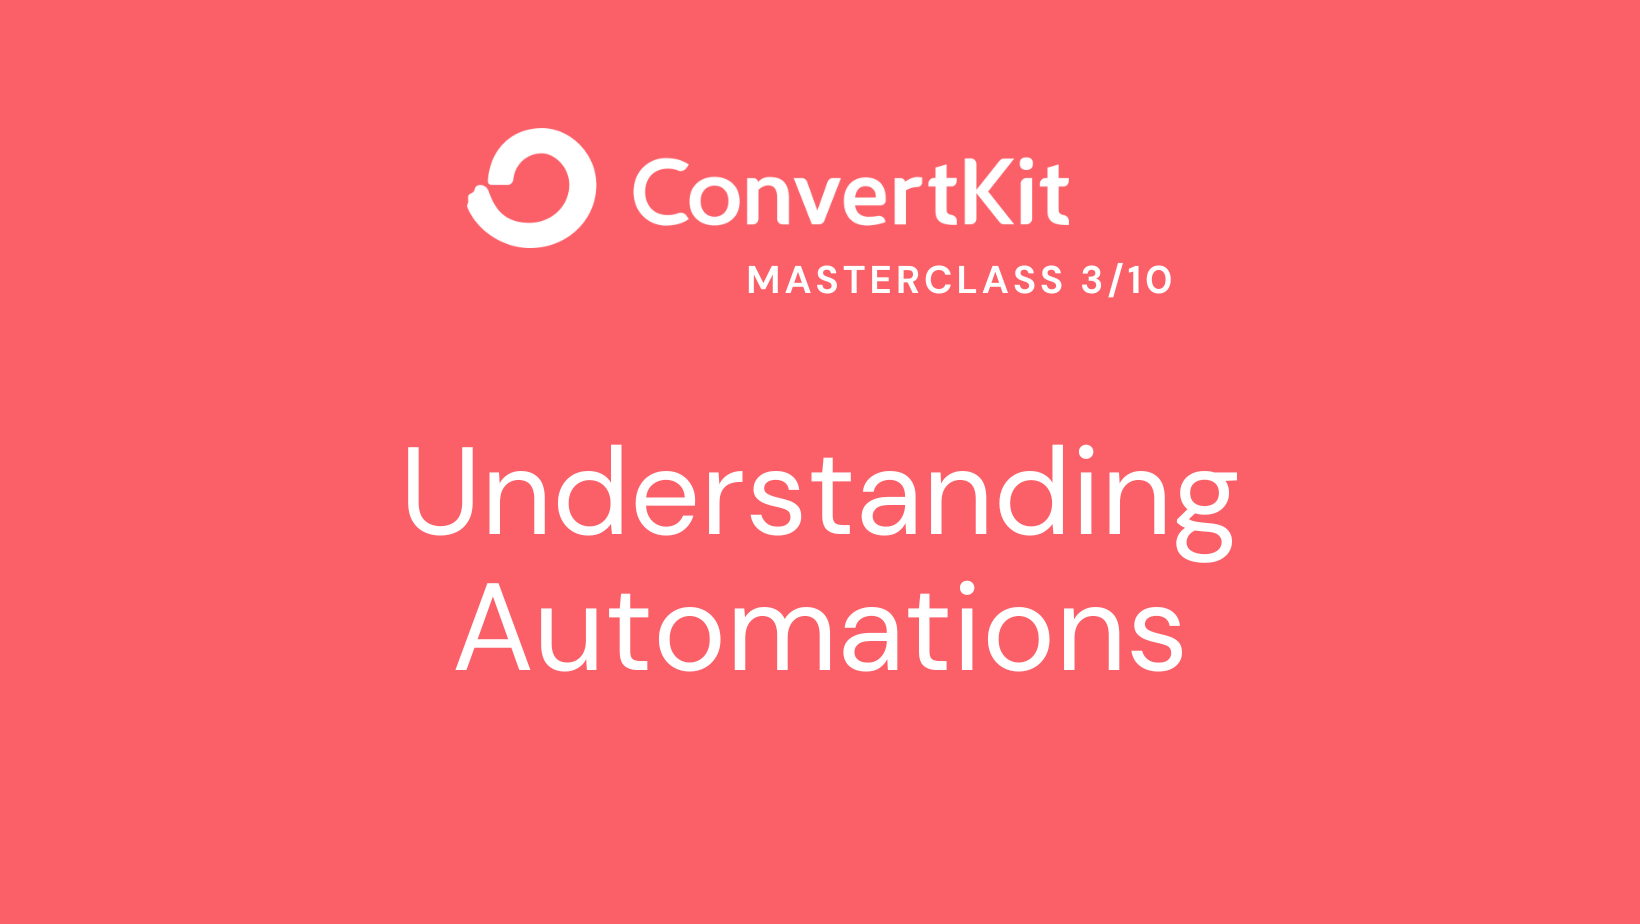 ConvertKit Masterclass 3/10 Understanding Automations